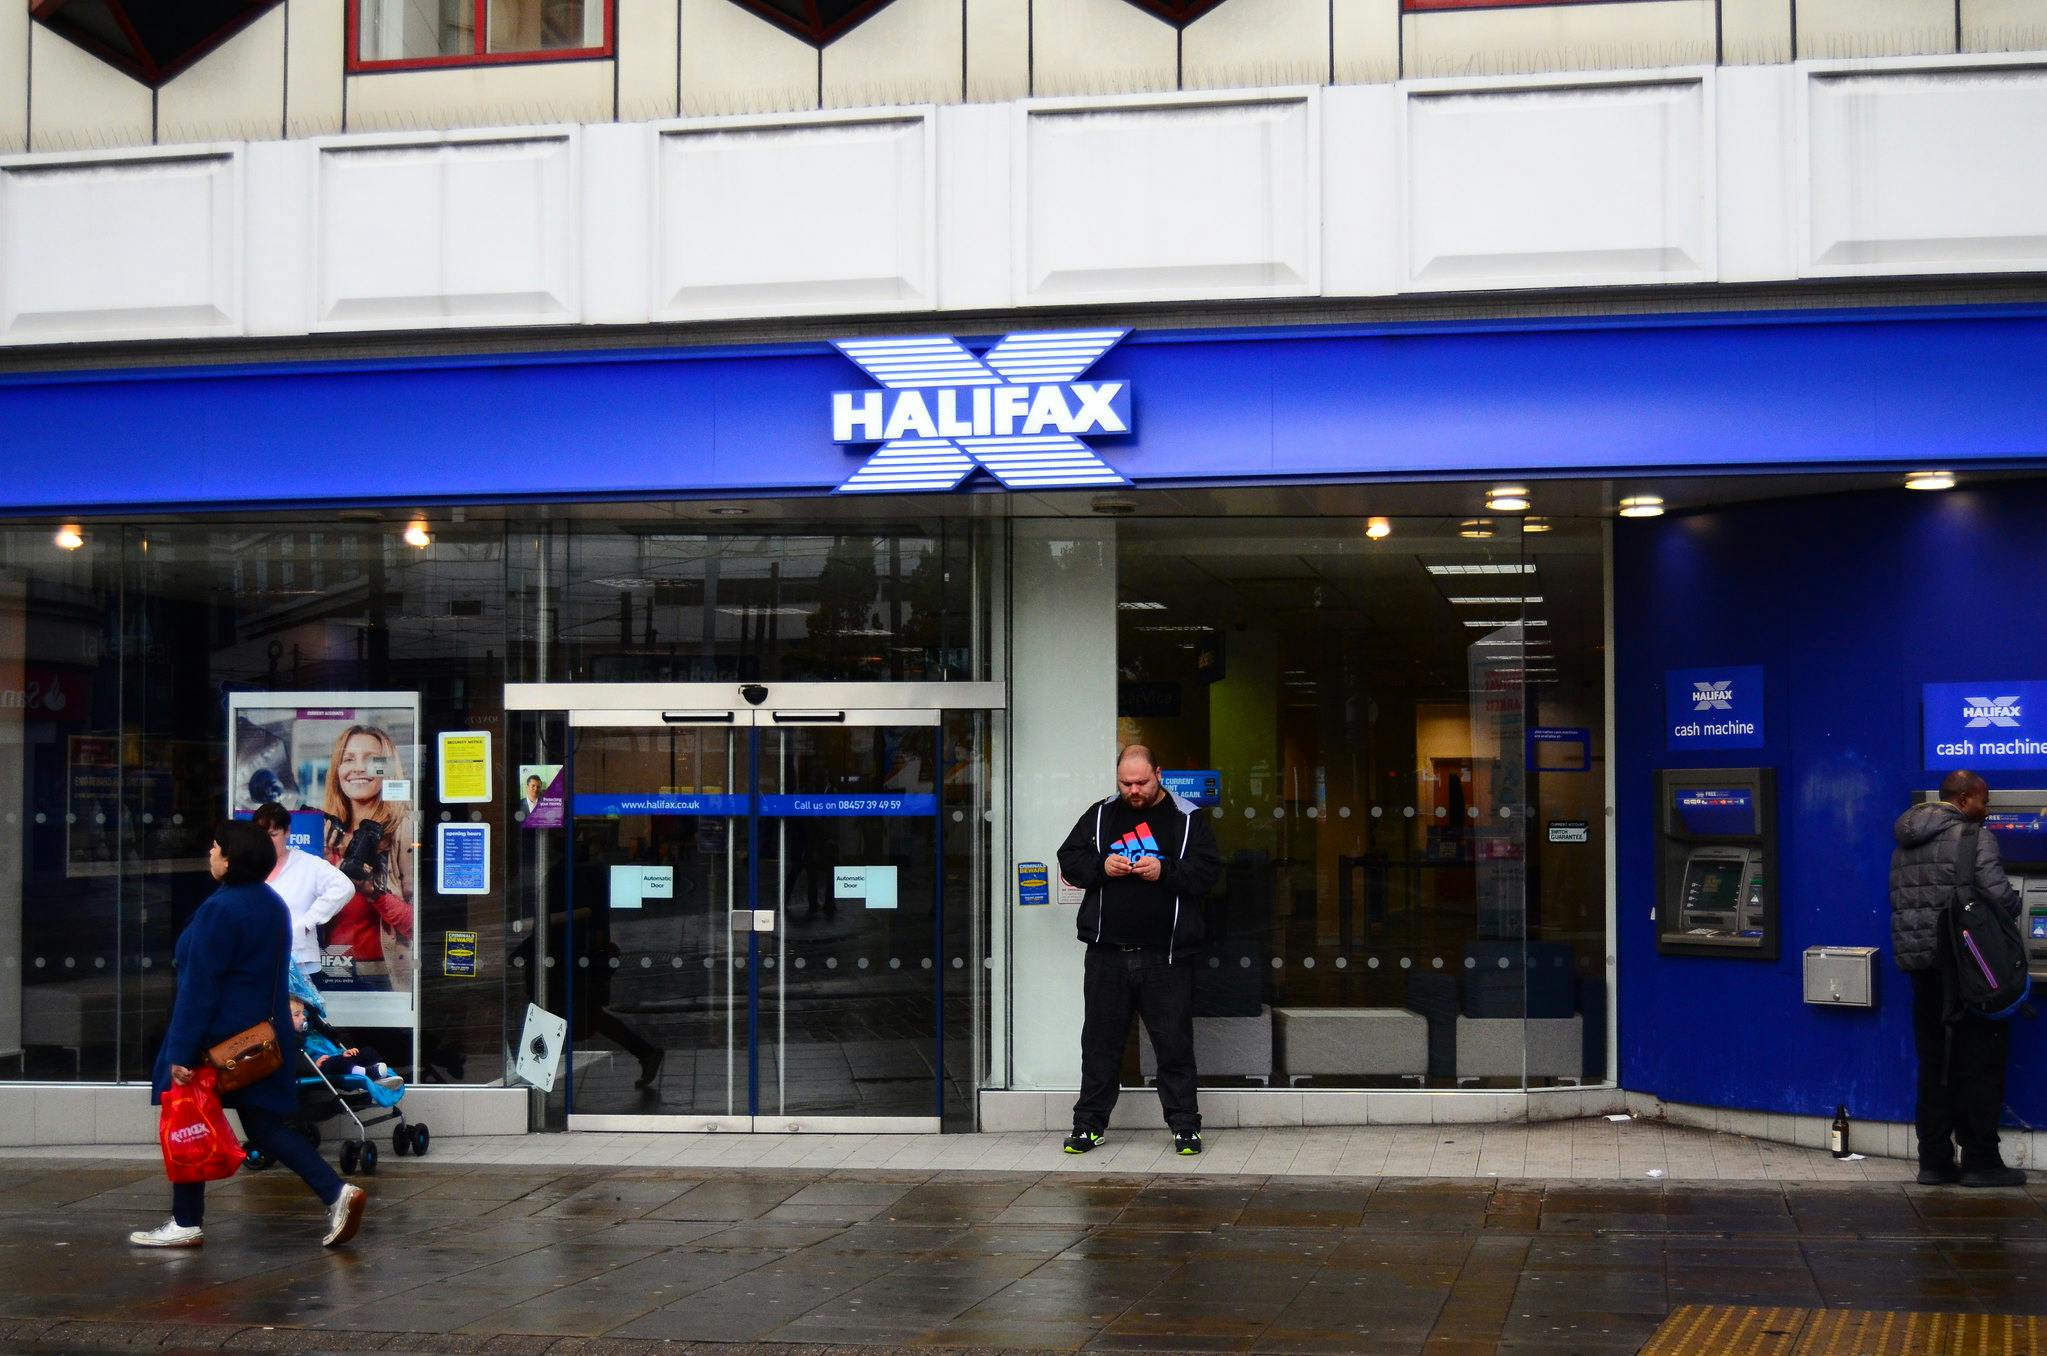 Halifax International Transfers: Fees, Rates, and Alternatives